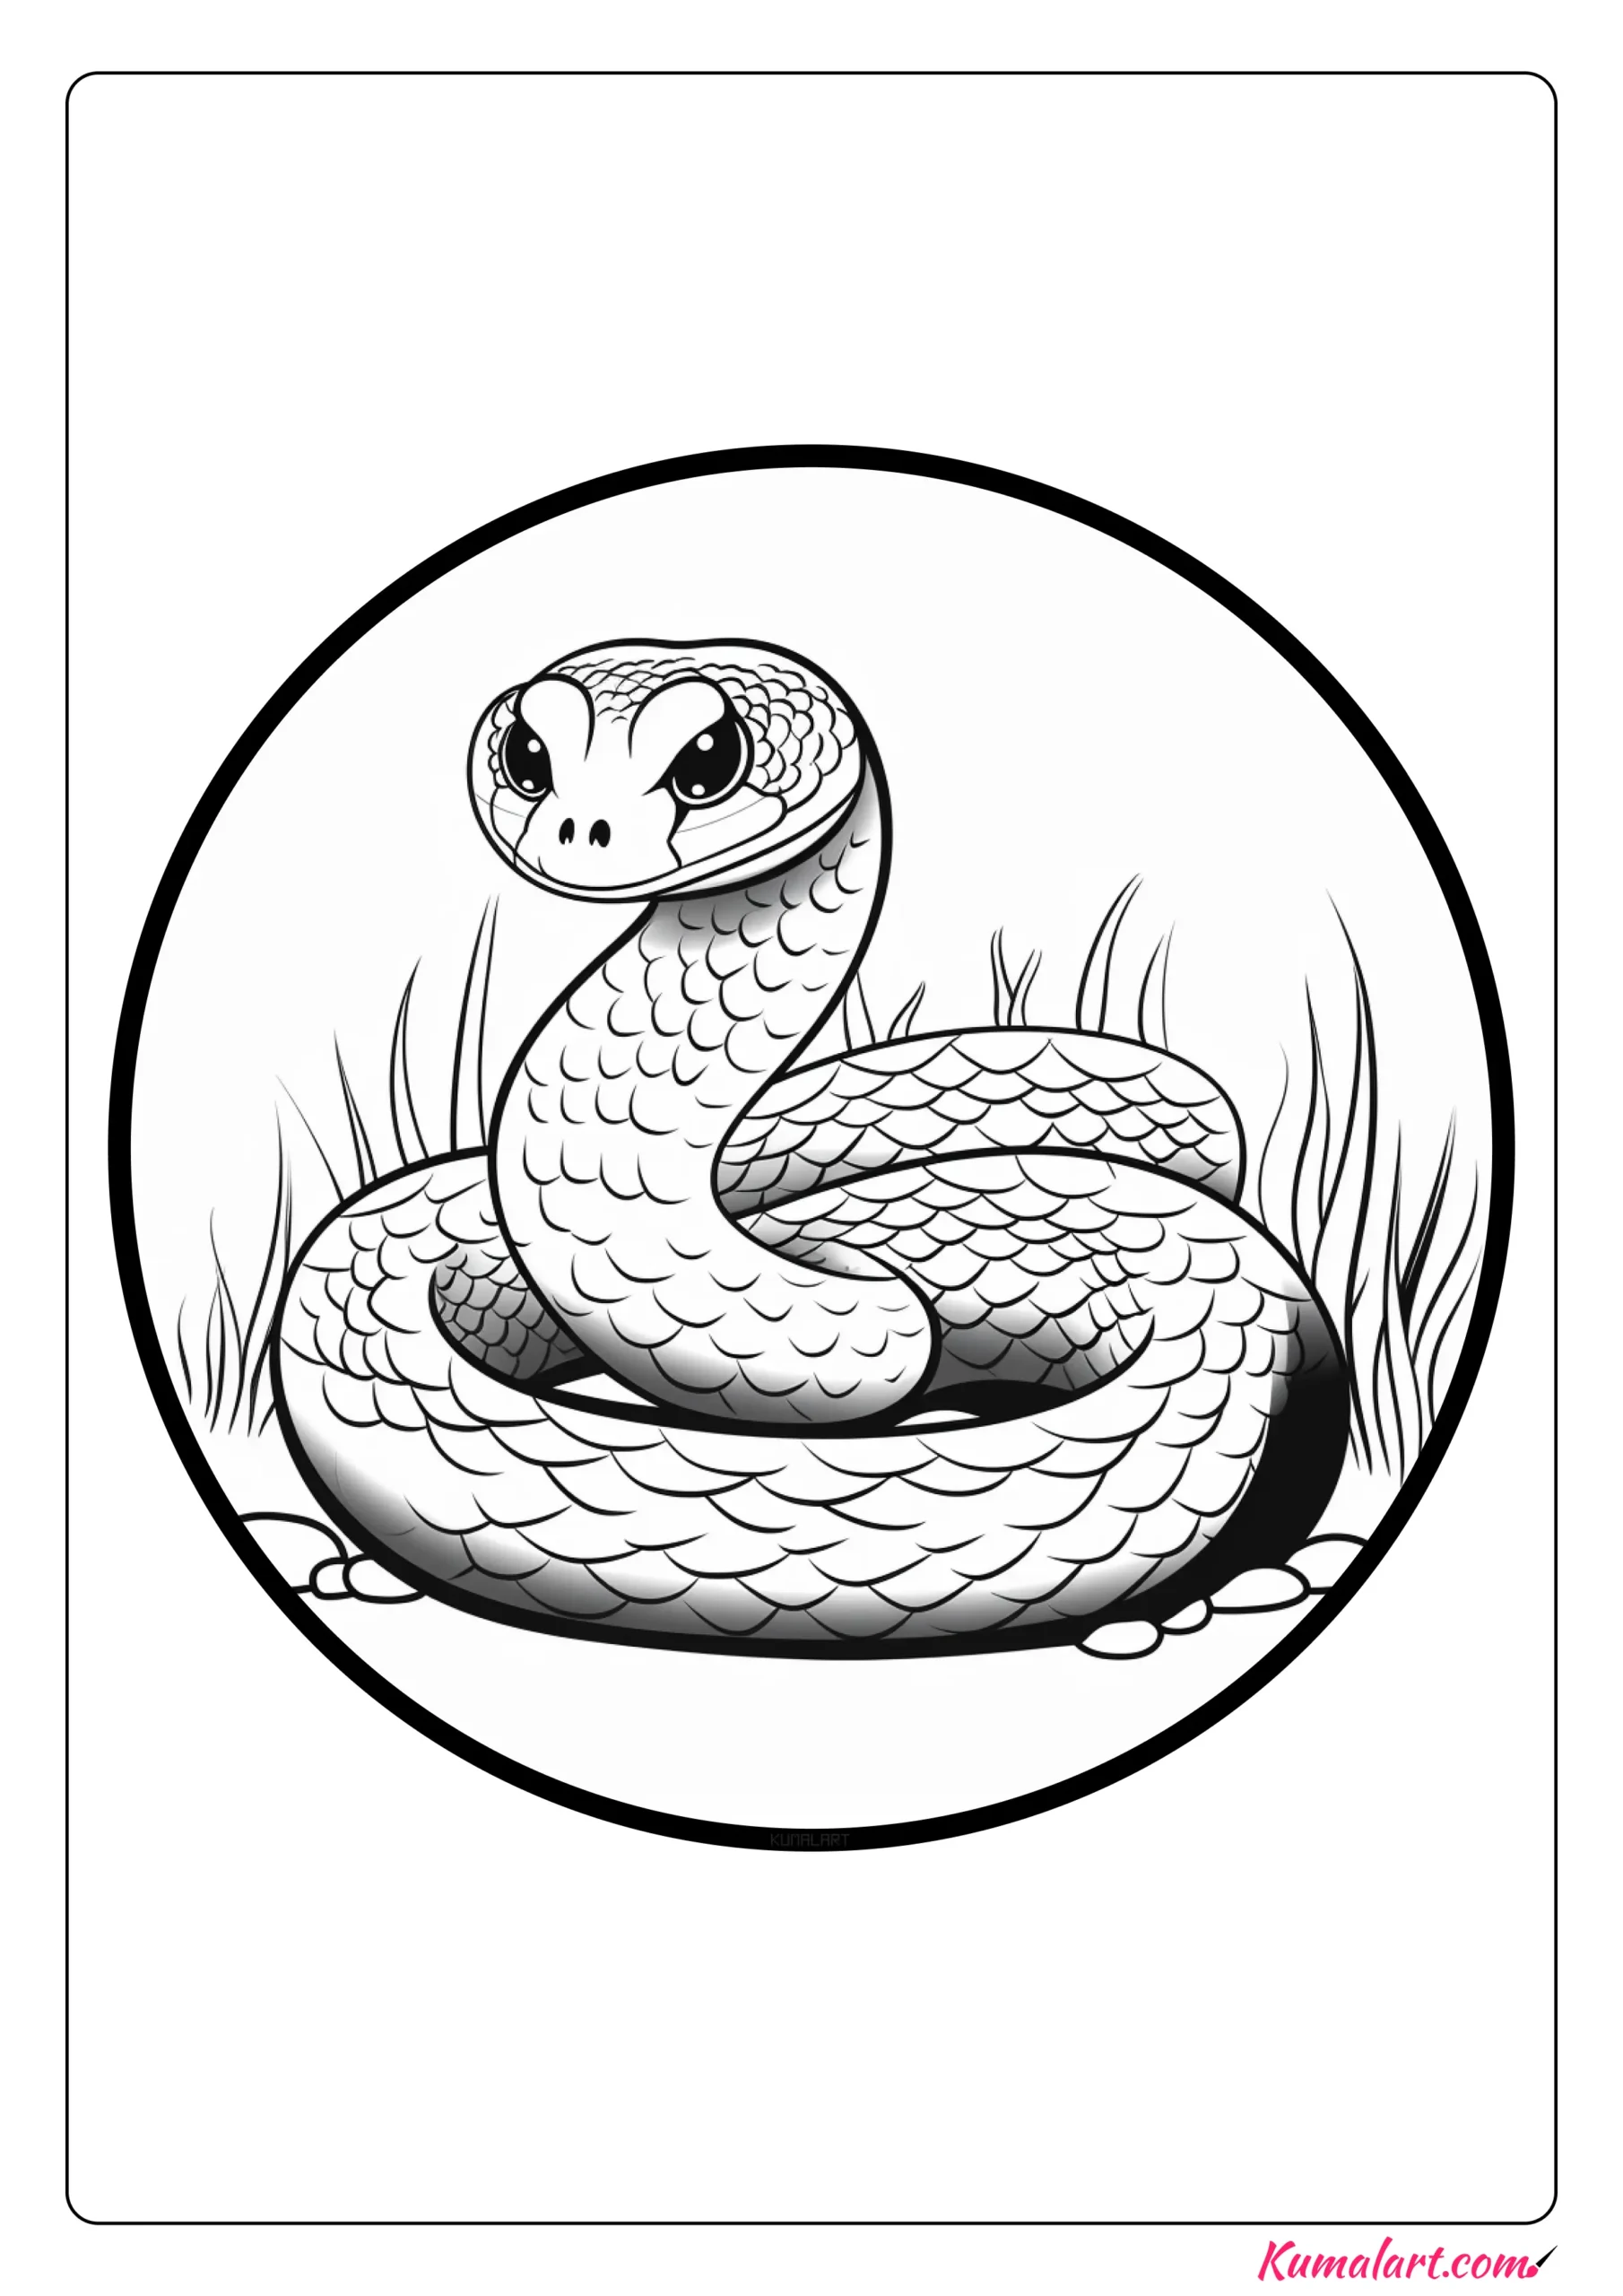 Massasauga Rattle Snake Coloring Page